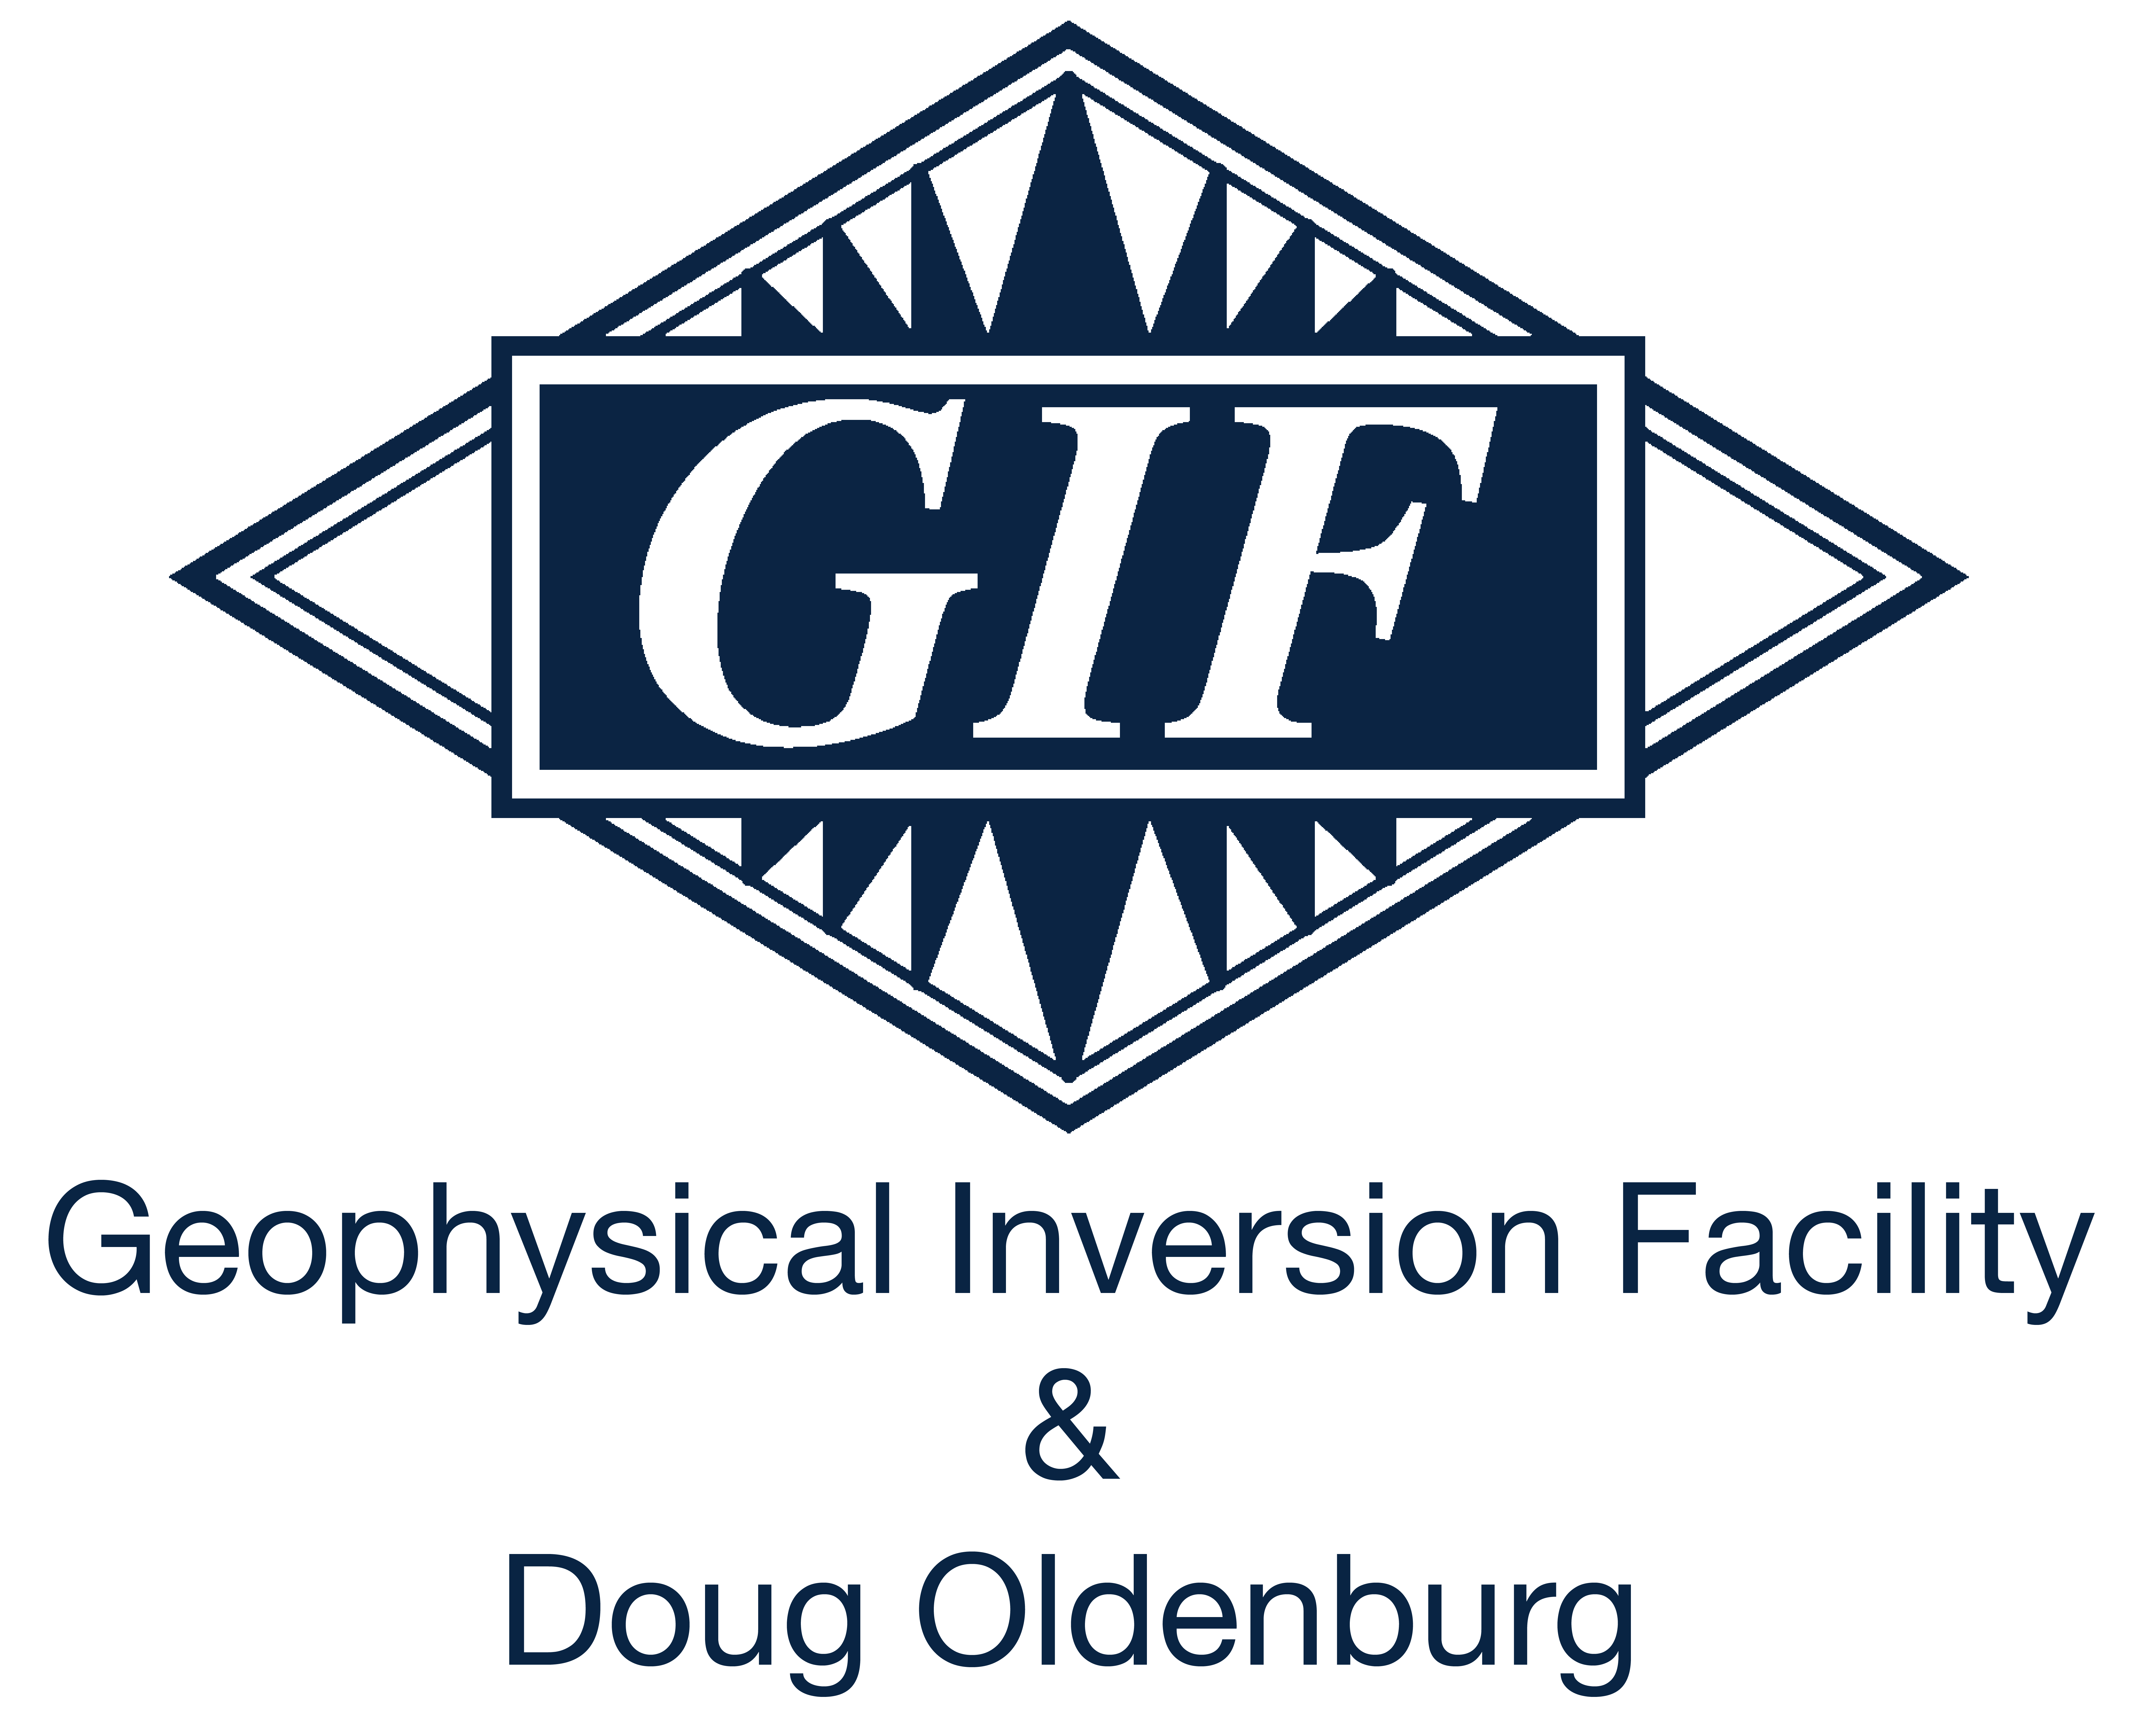 GIF logo